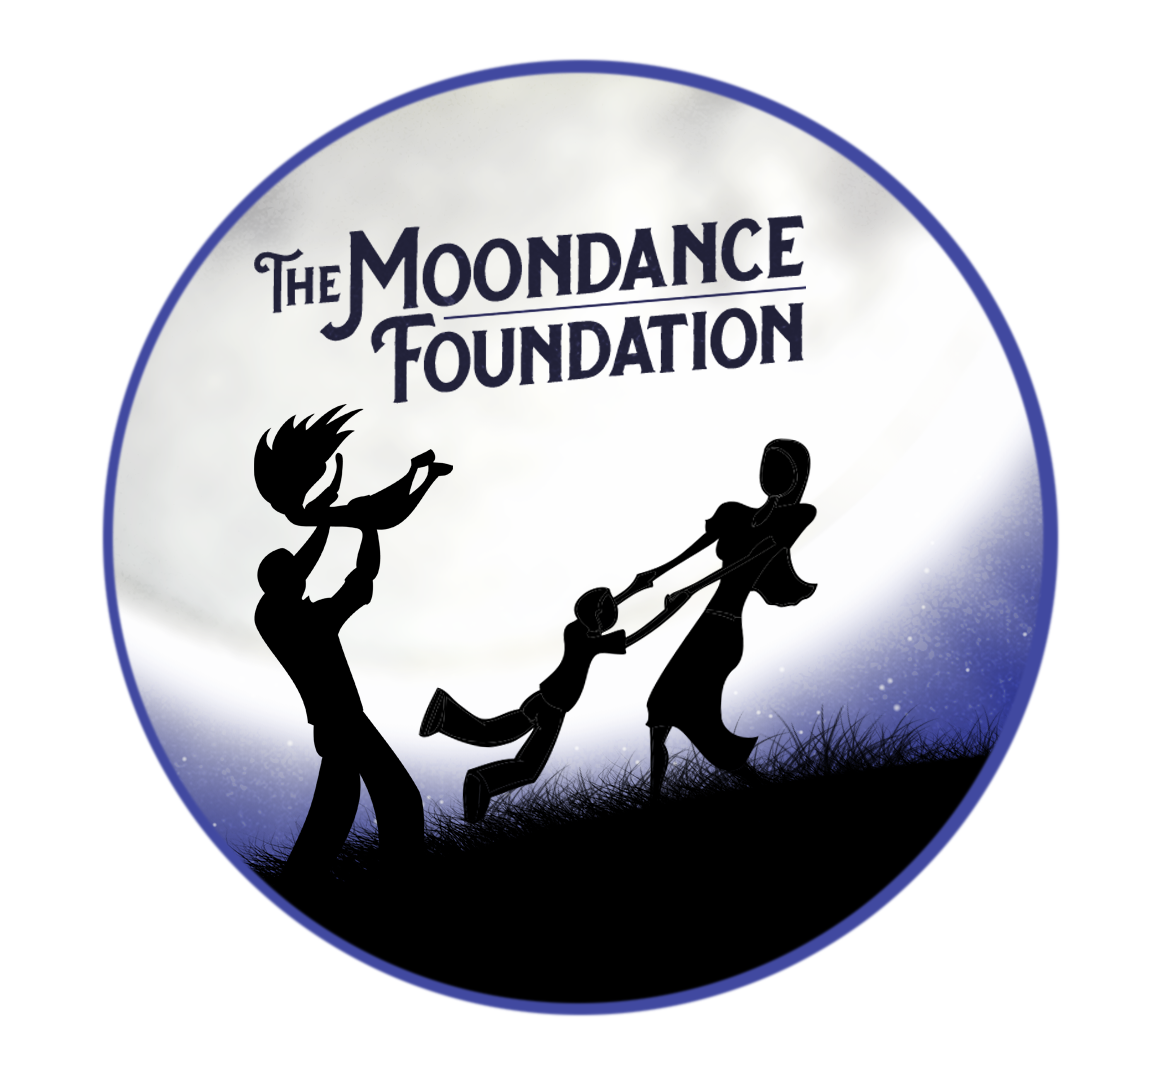 Ariannu: Moondance Foundation